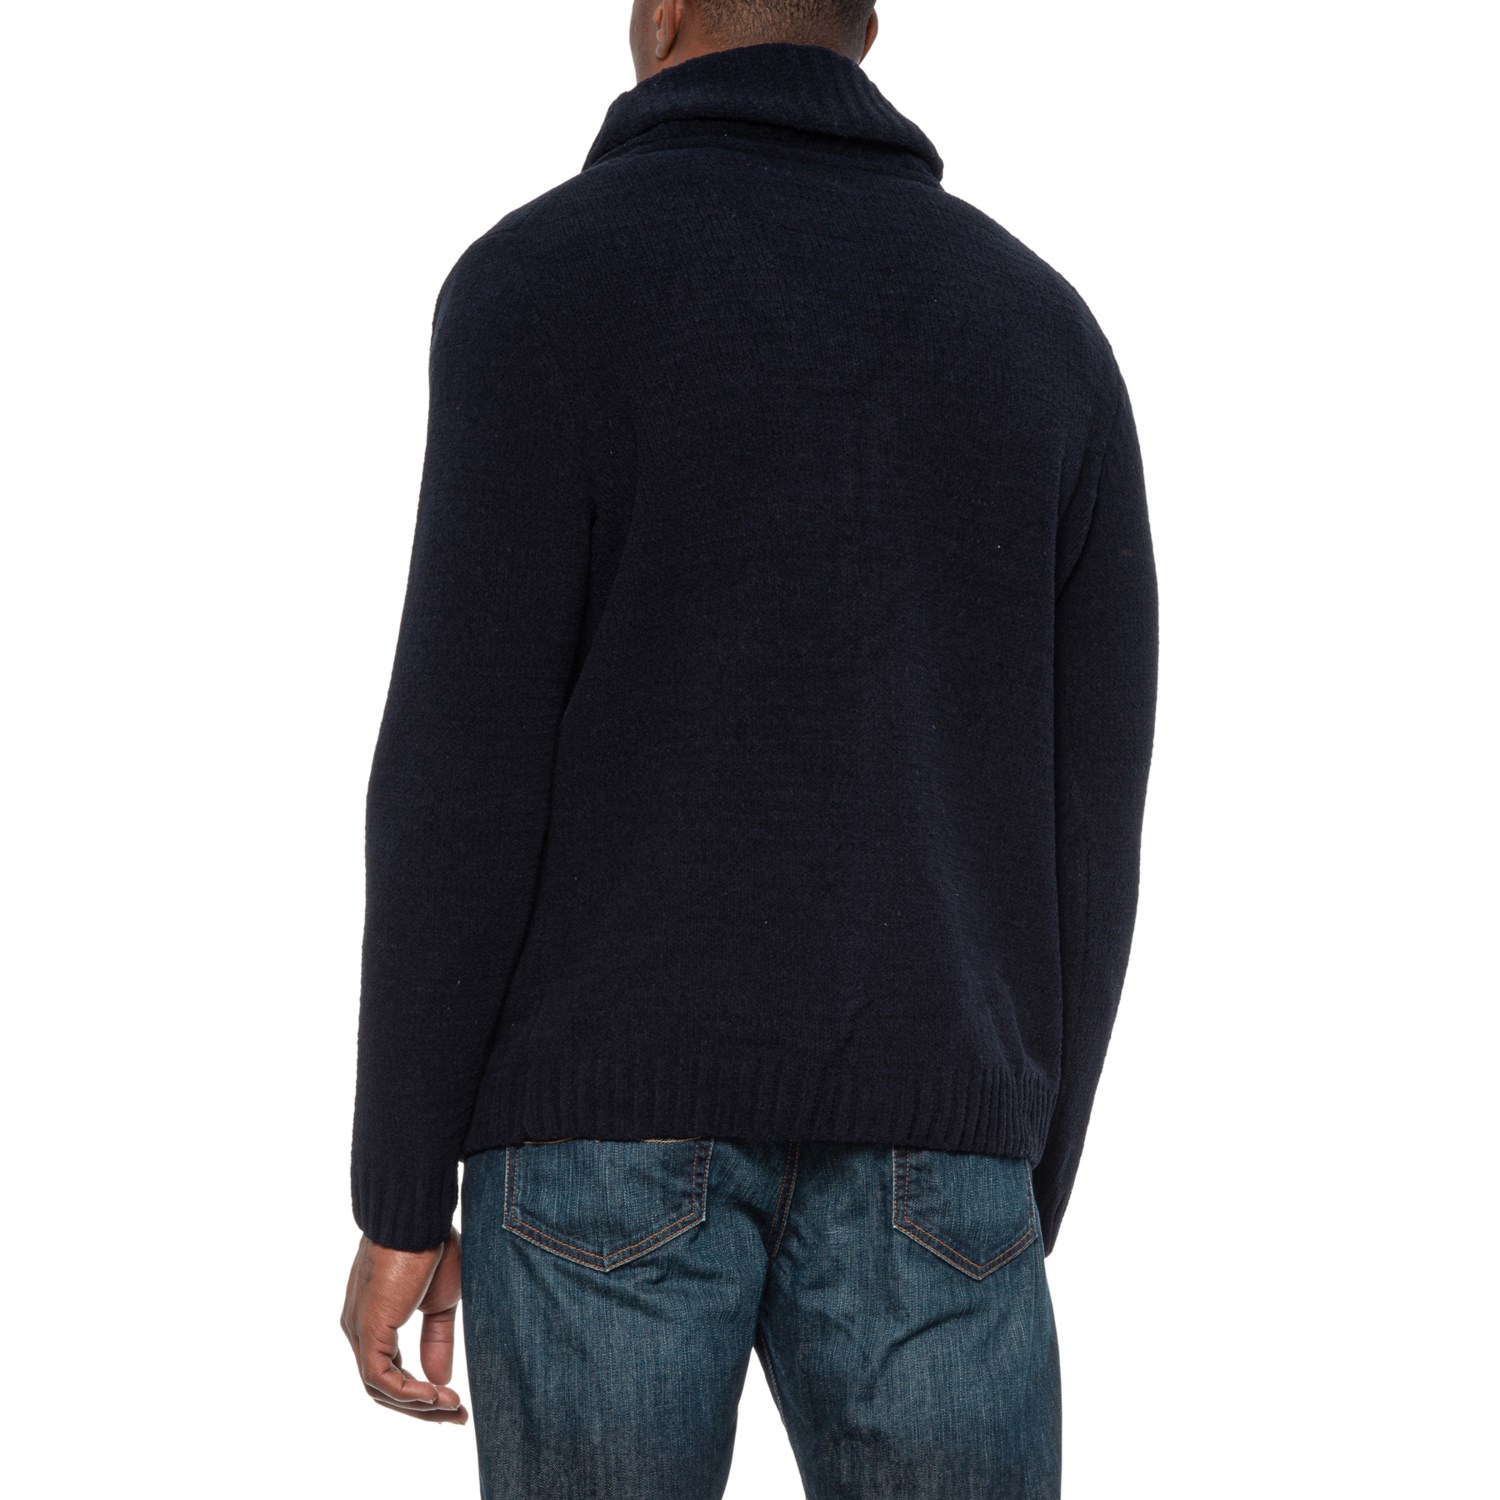 British Khaki Full-Button Chenille Cardigan Sweater (For Men) - Save 67%